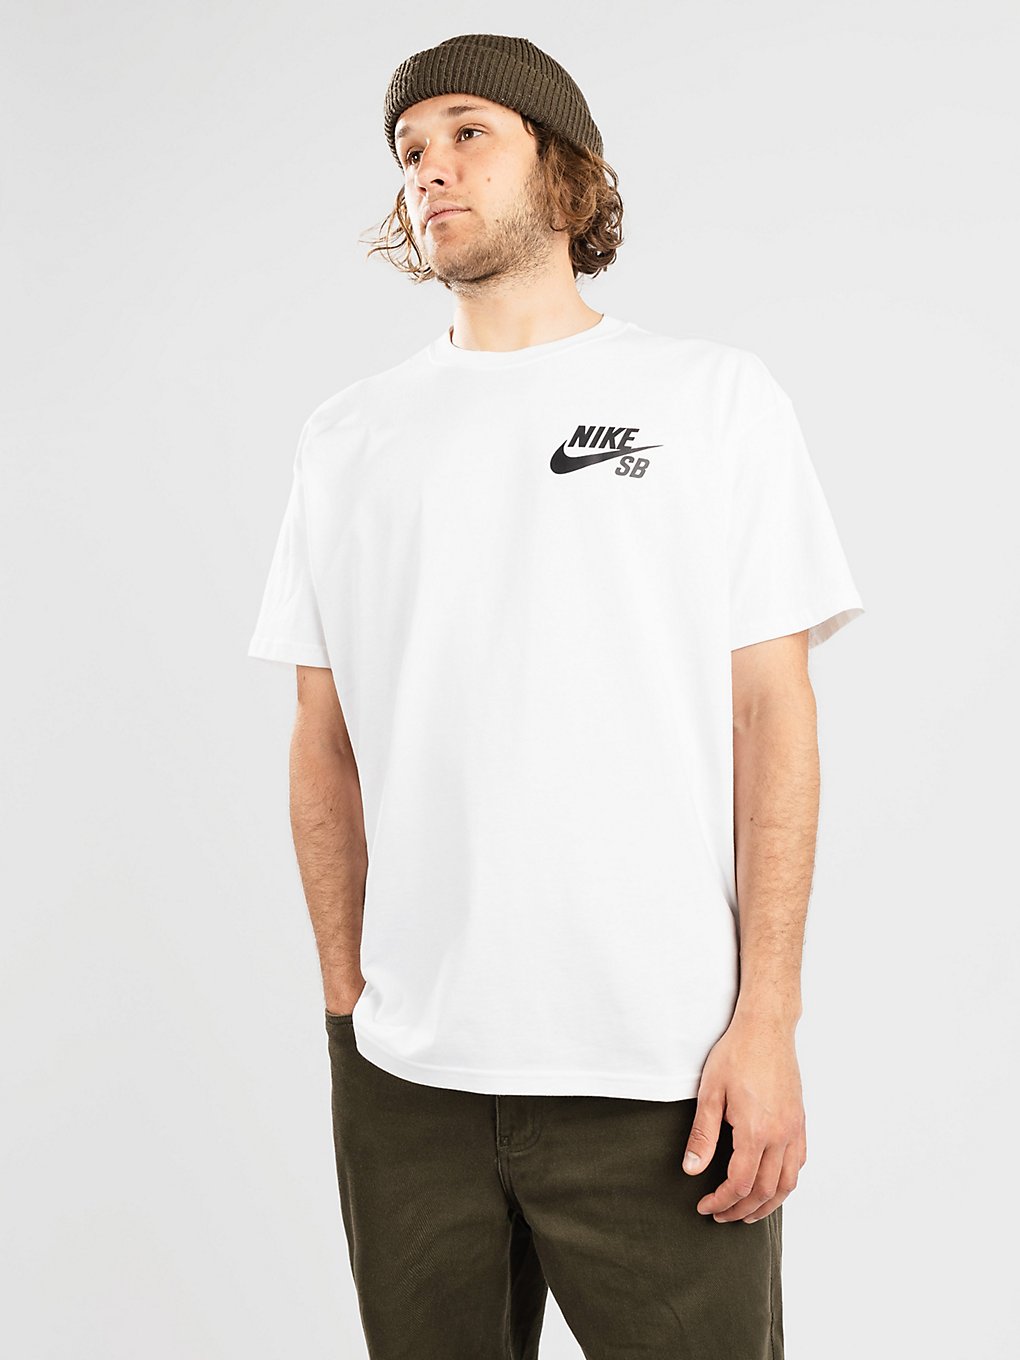 Nike Sb T-Shirt wit